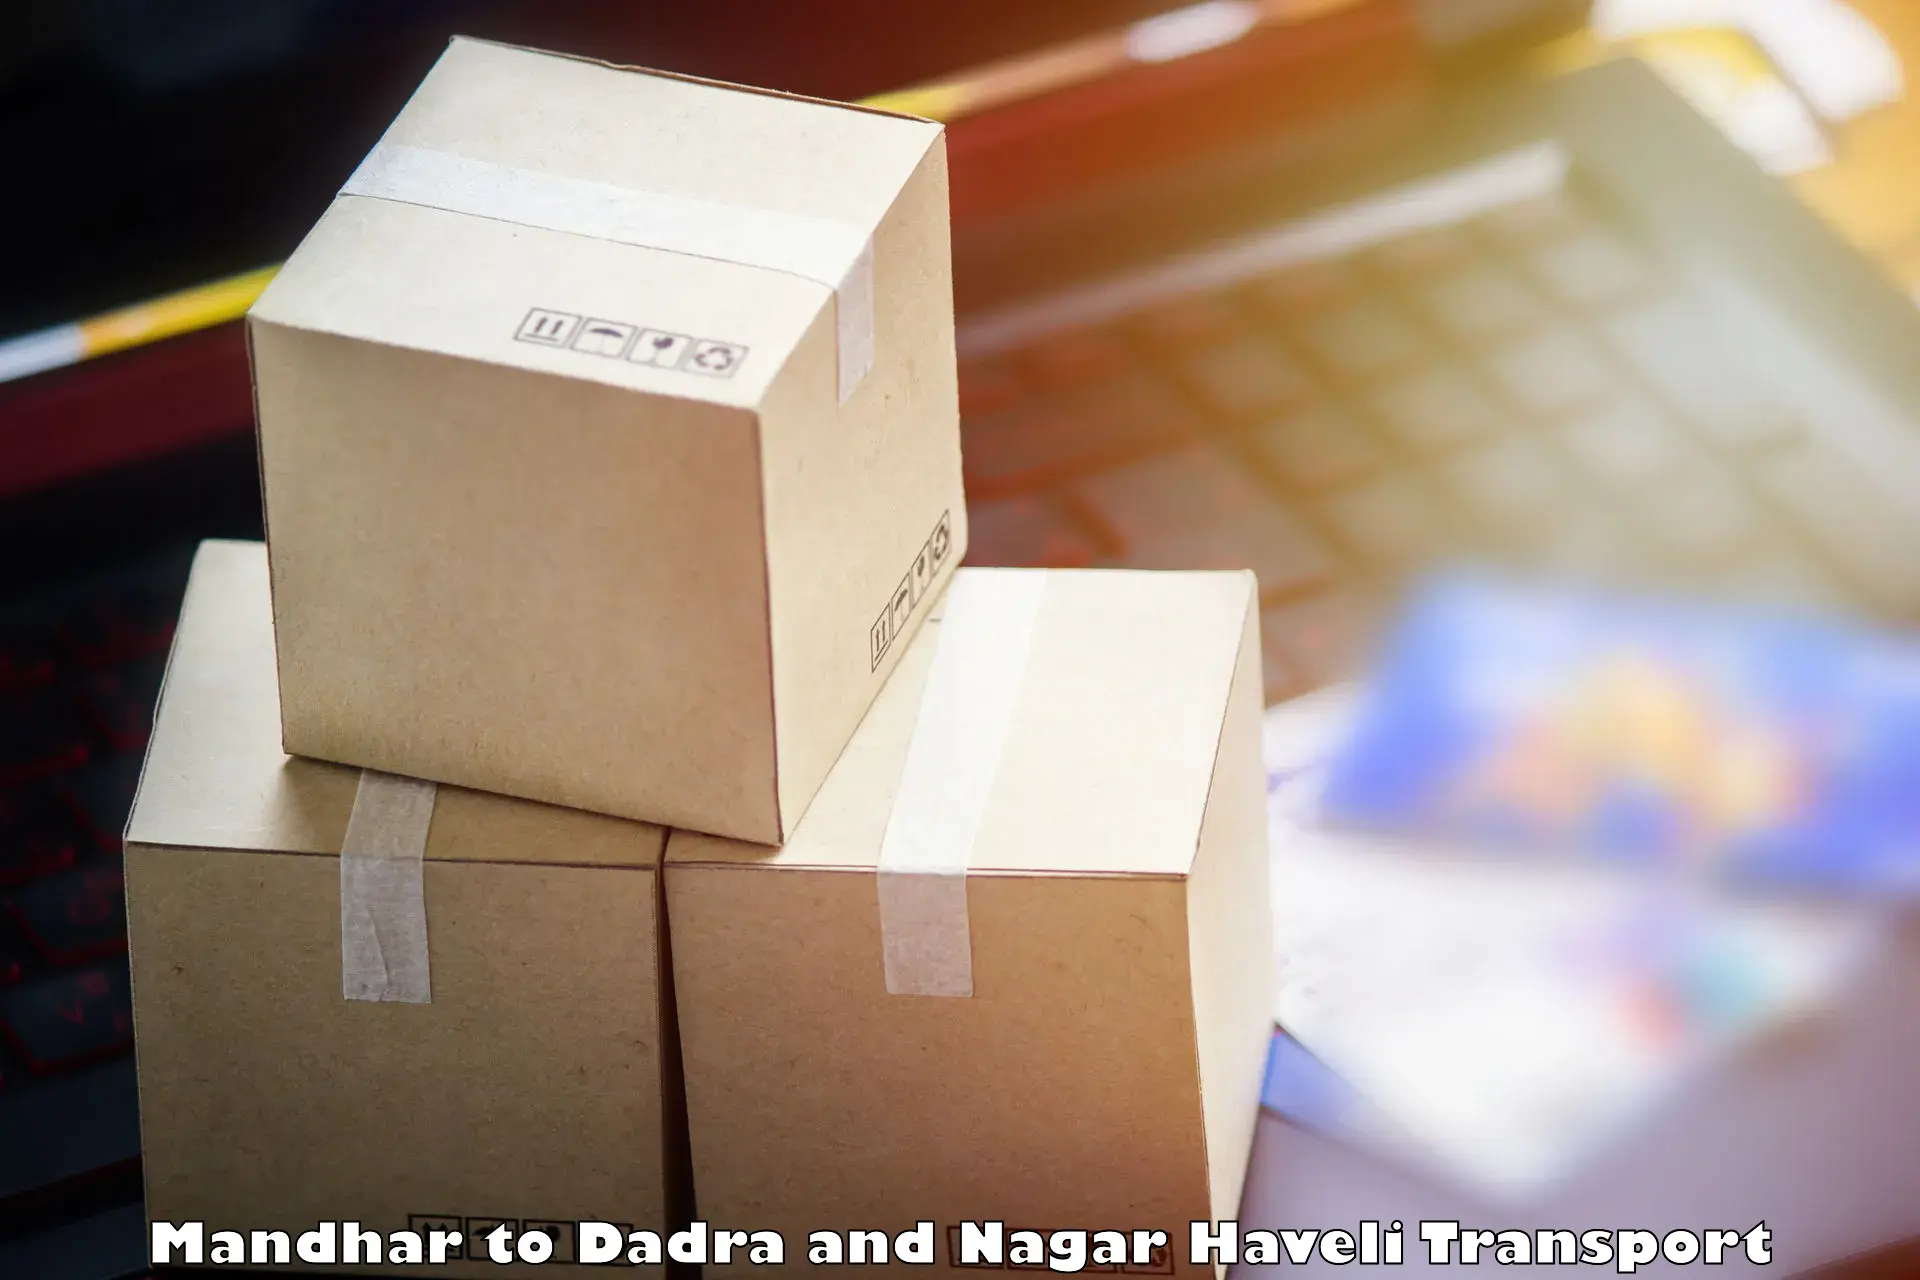 Shipping partner Mandhar to Dadra and Nagar Haveli